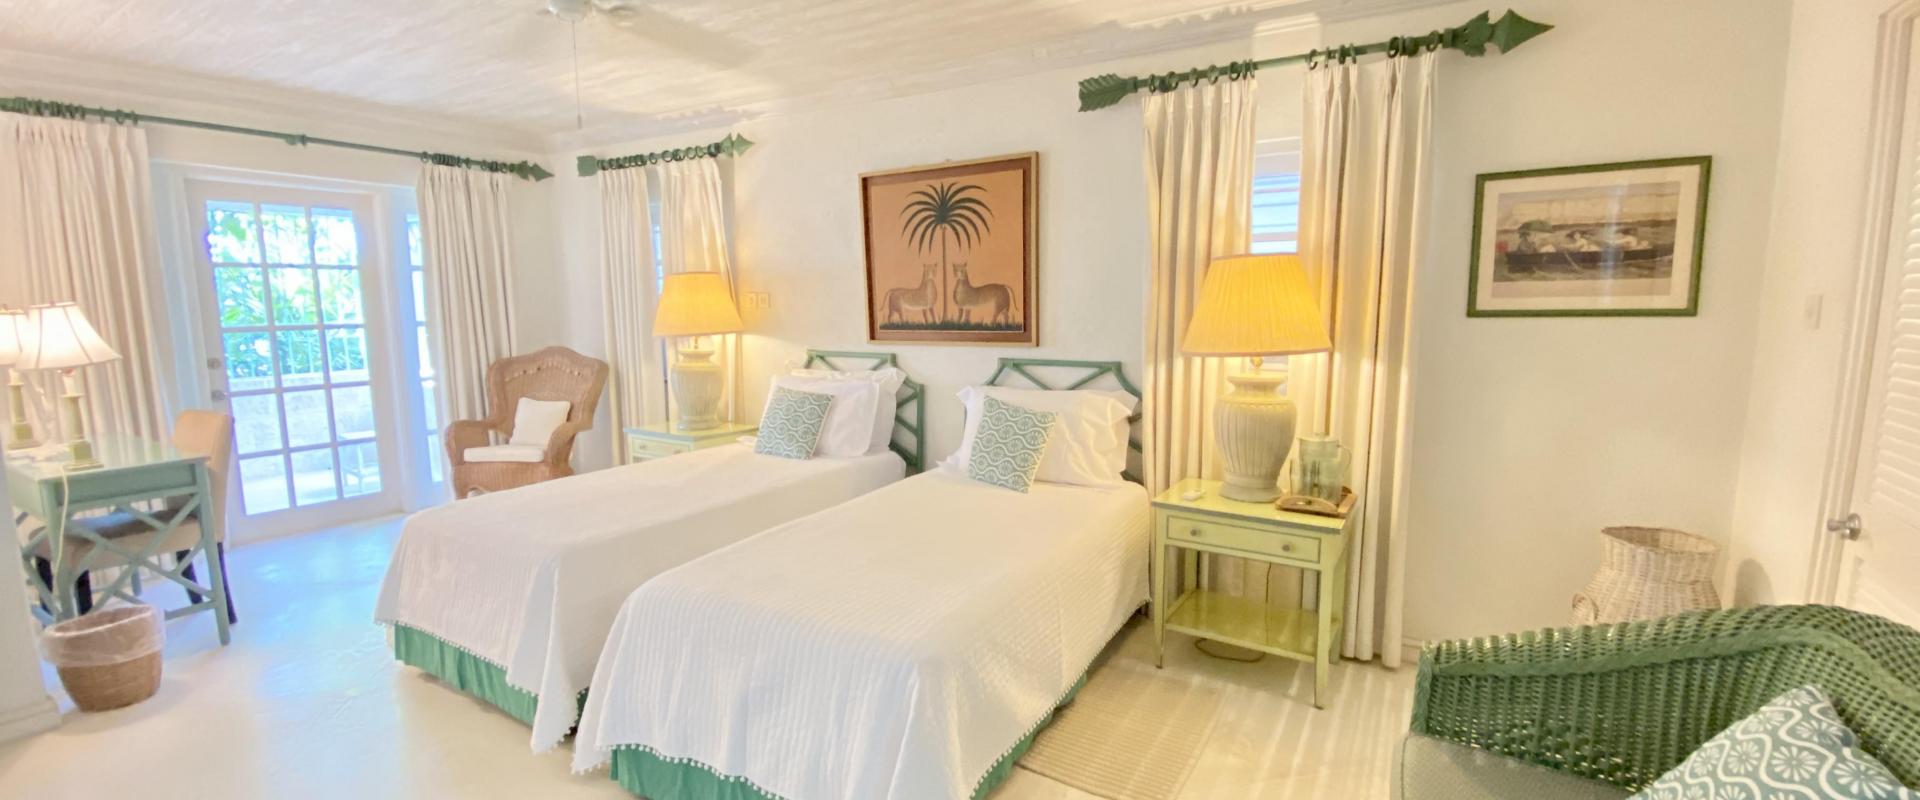 Beachfront Barbados Villa Rental Seascape Bedroom 4 Two Twin Beds